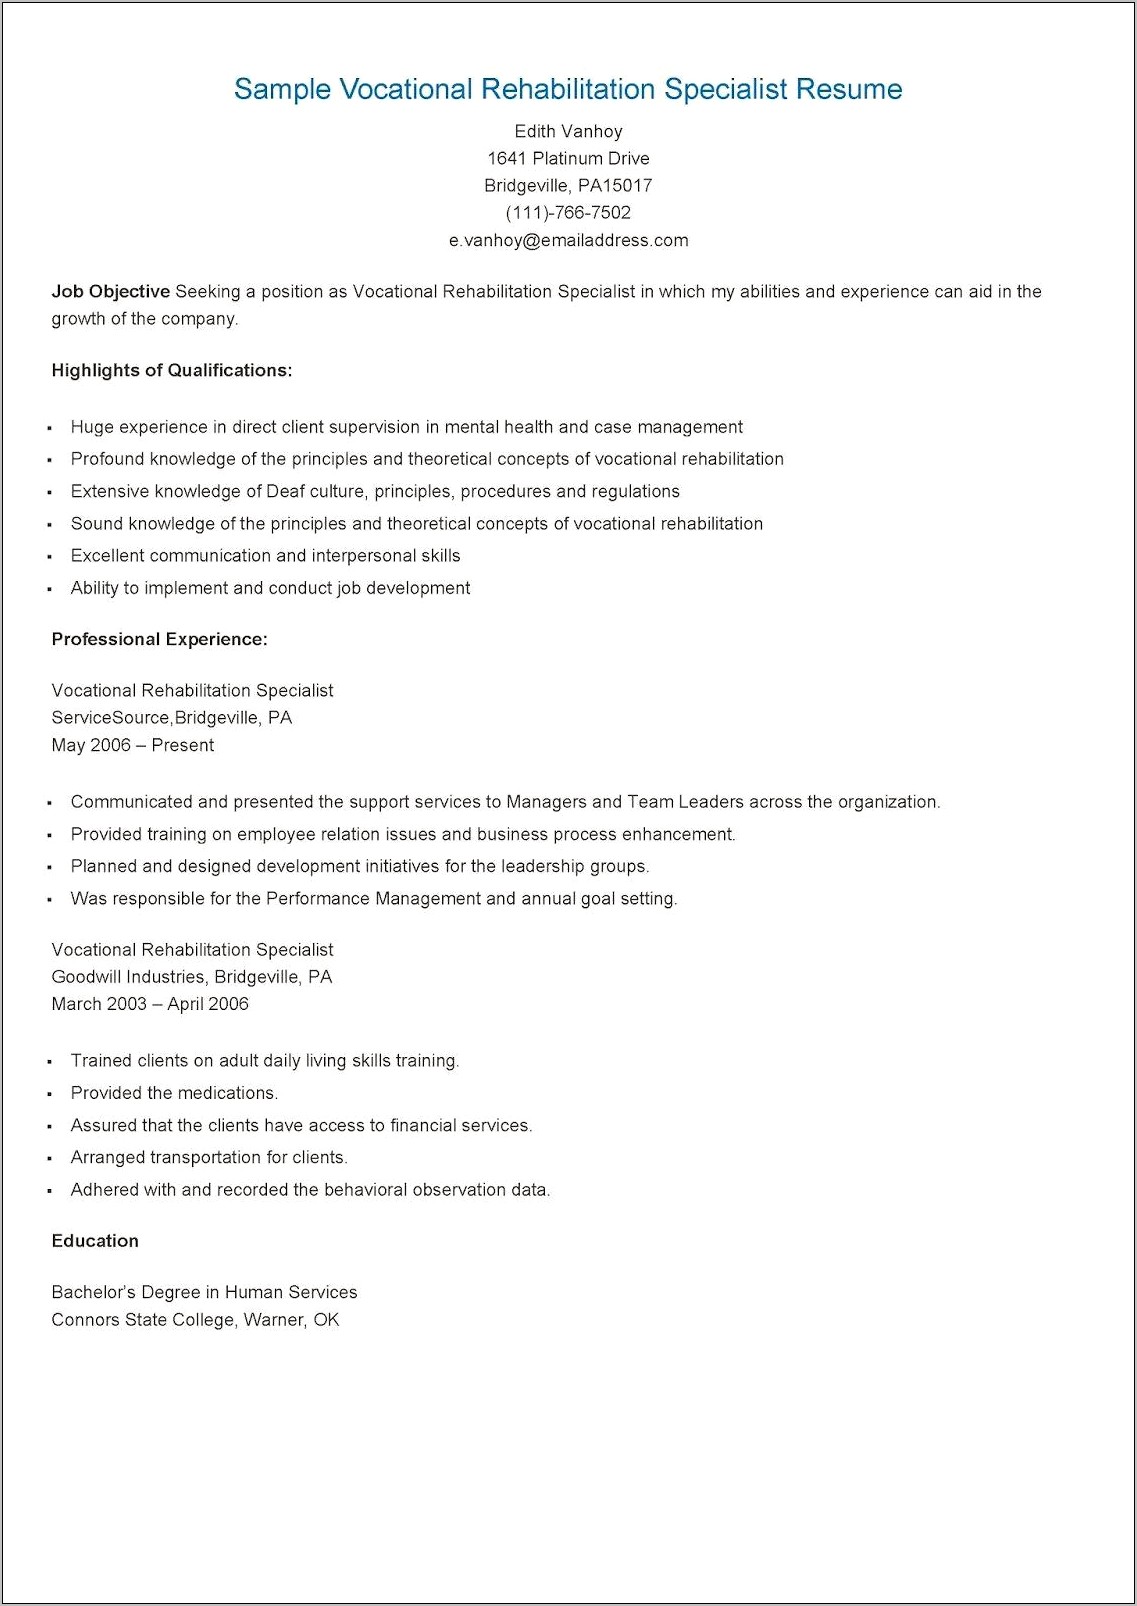 Mental Health Specialist Job Description For Resume